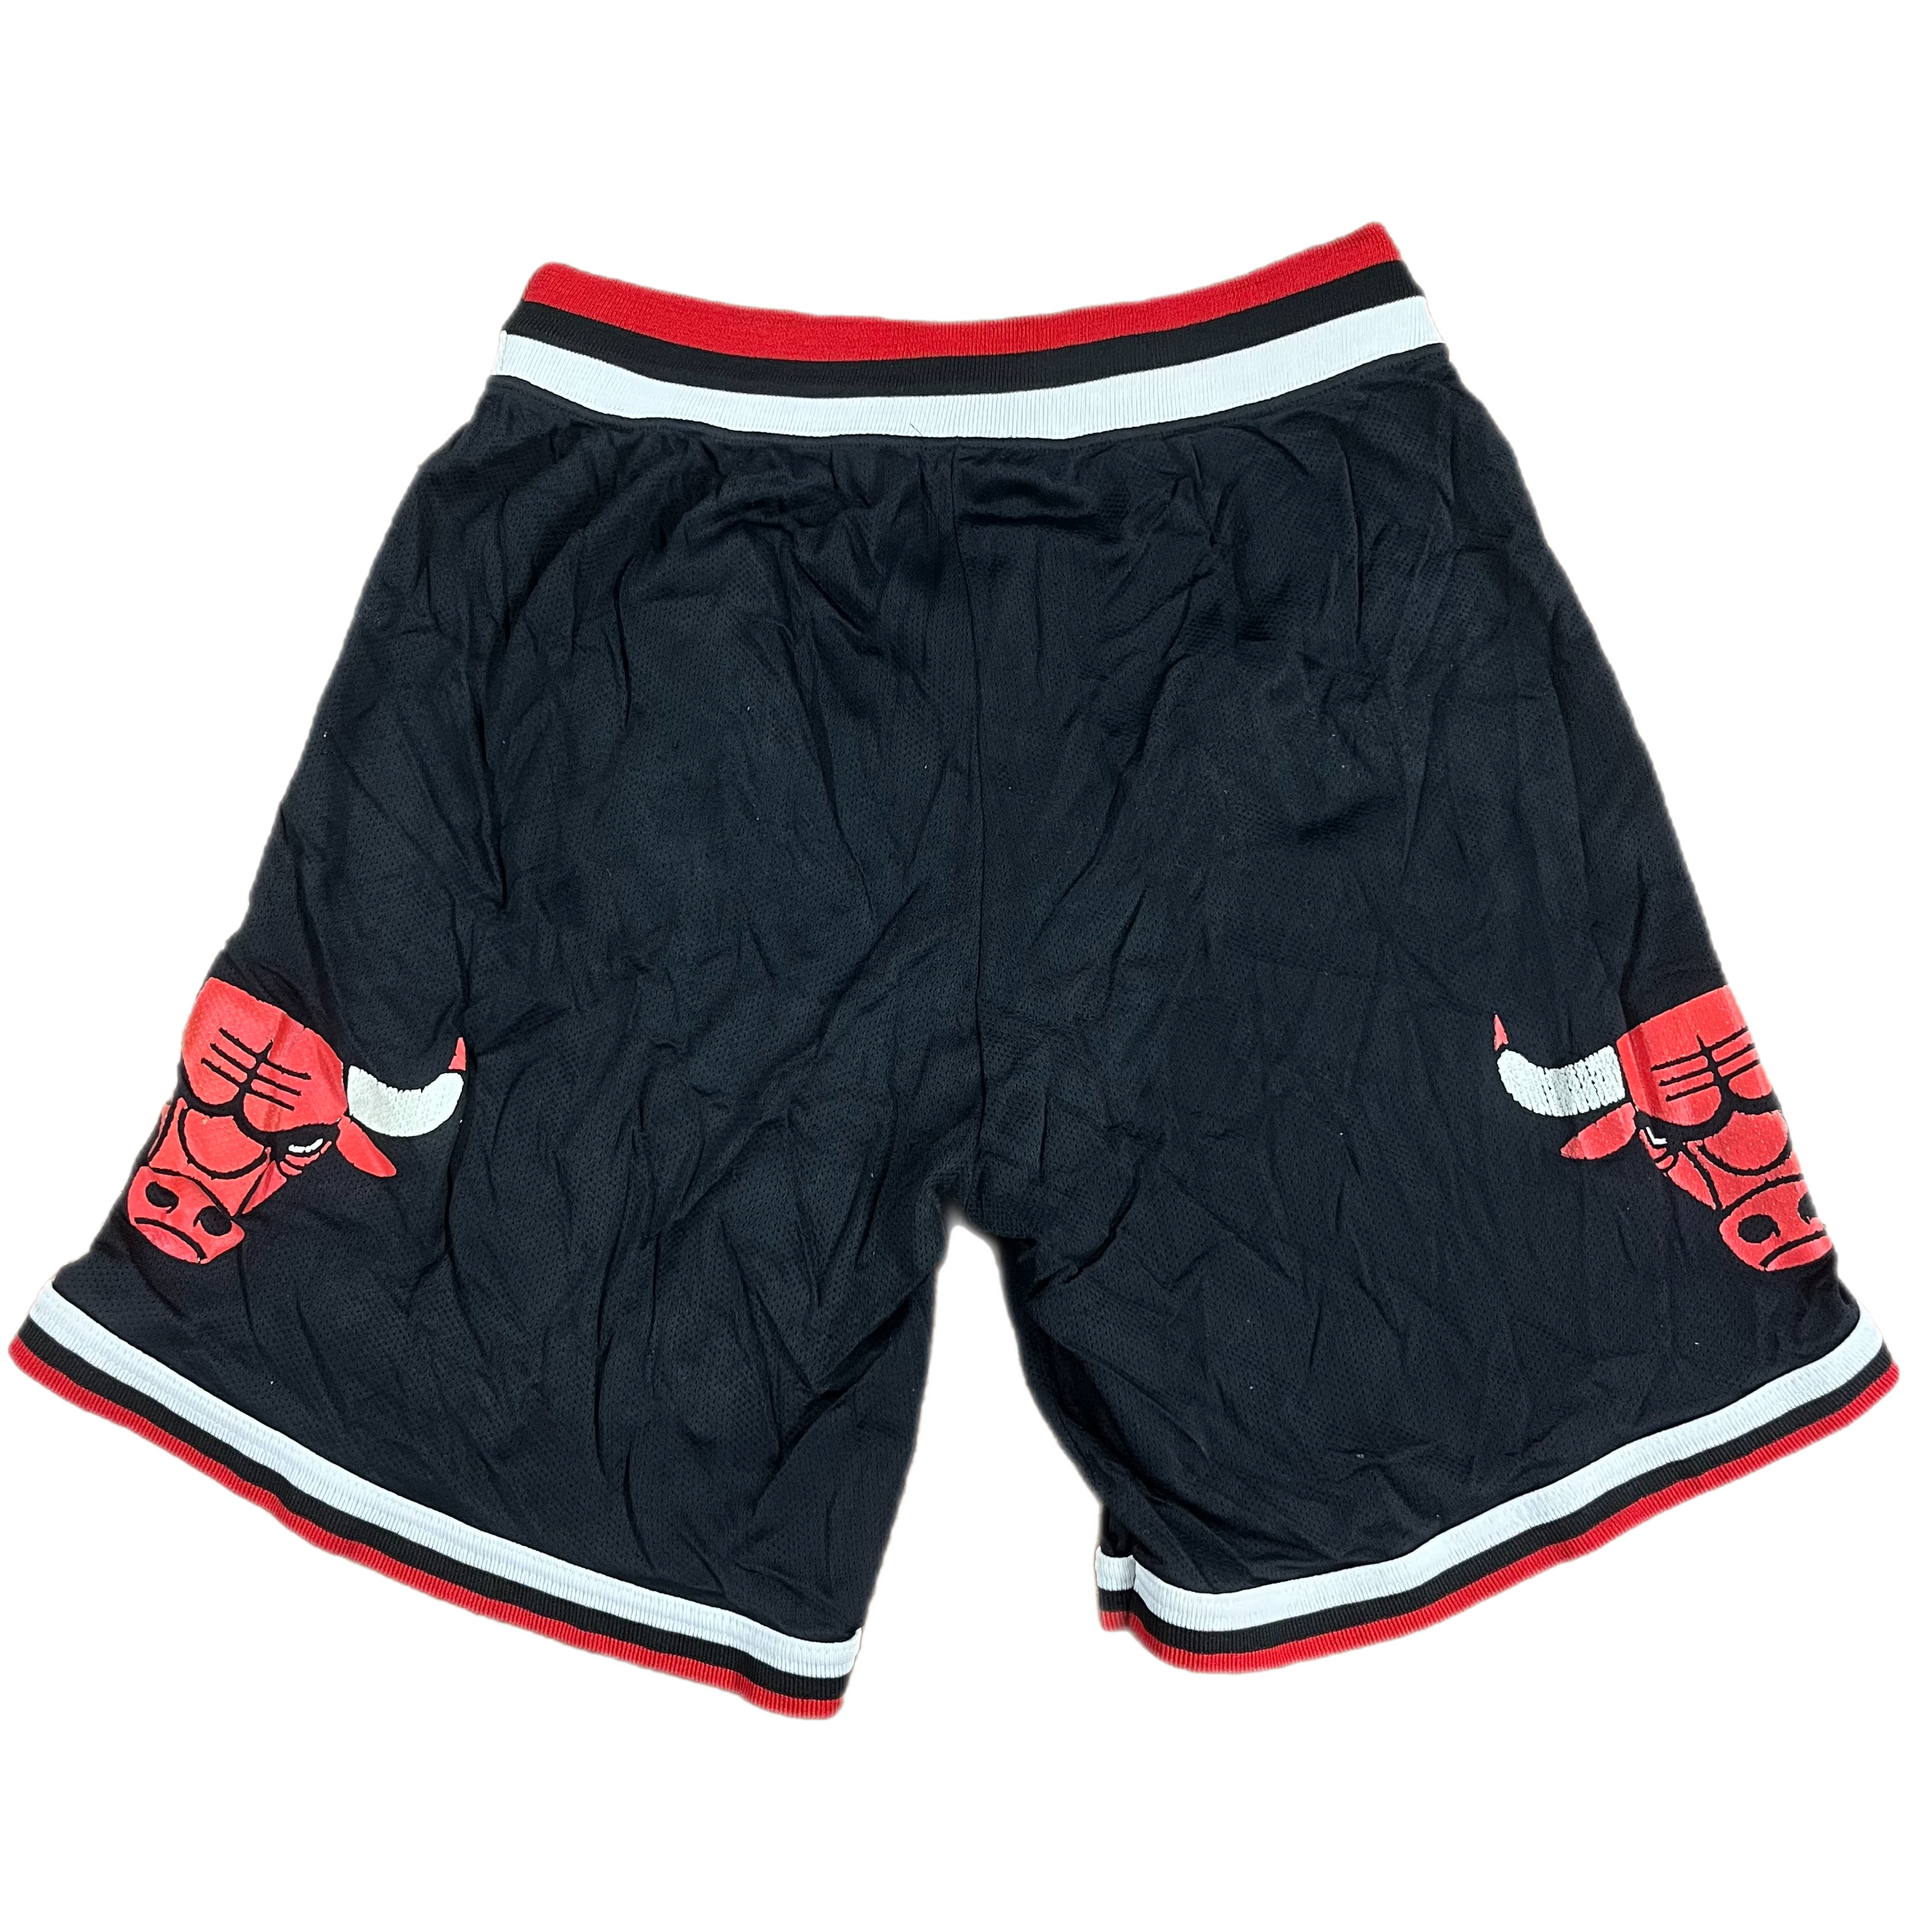 nba basketball shorts